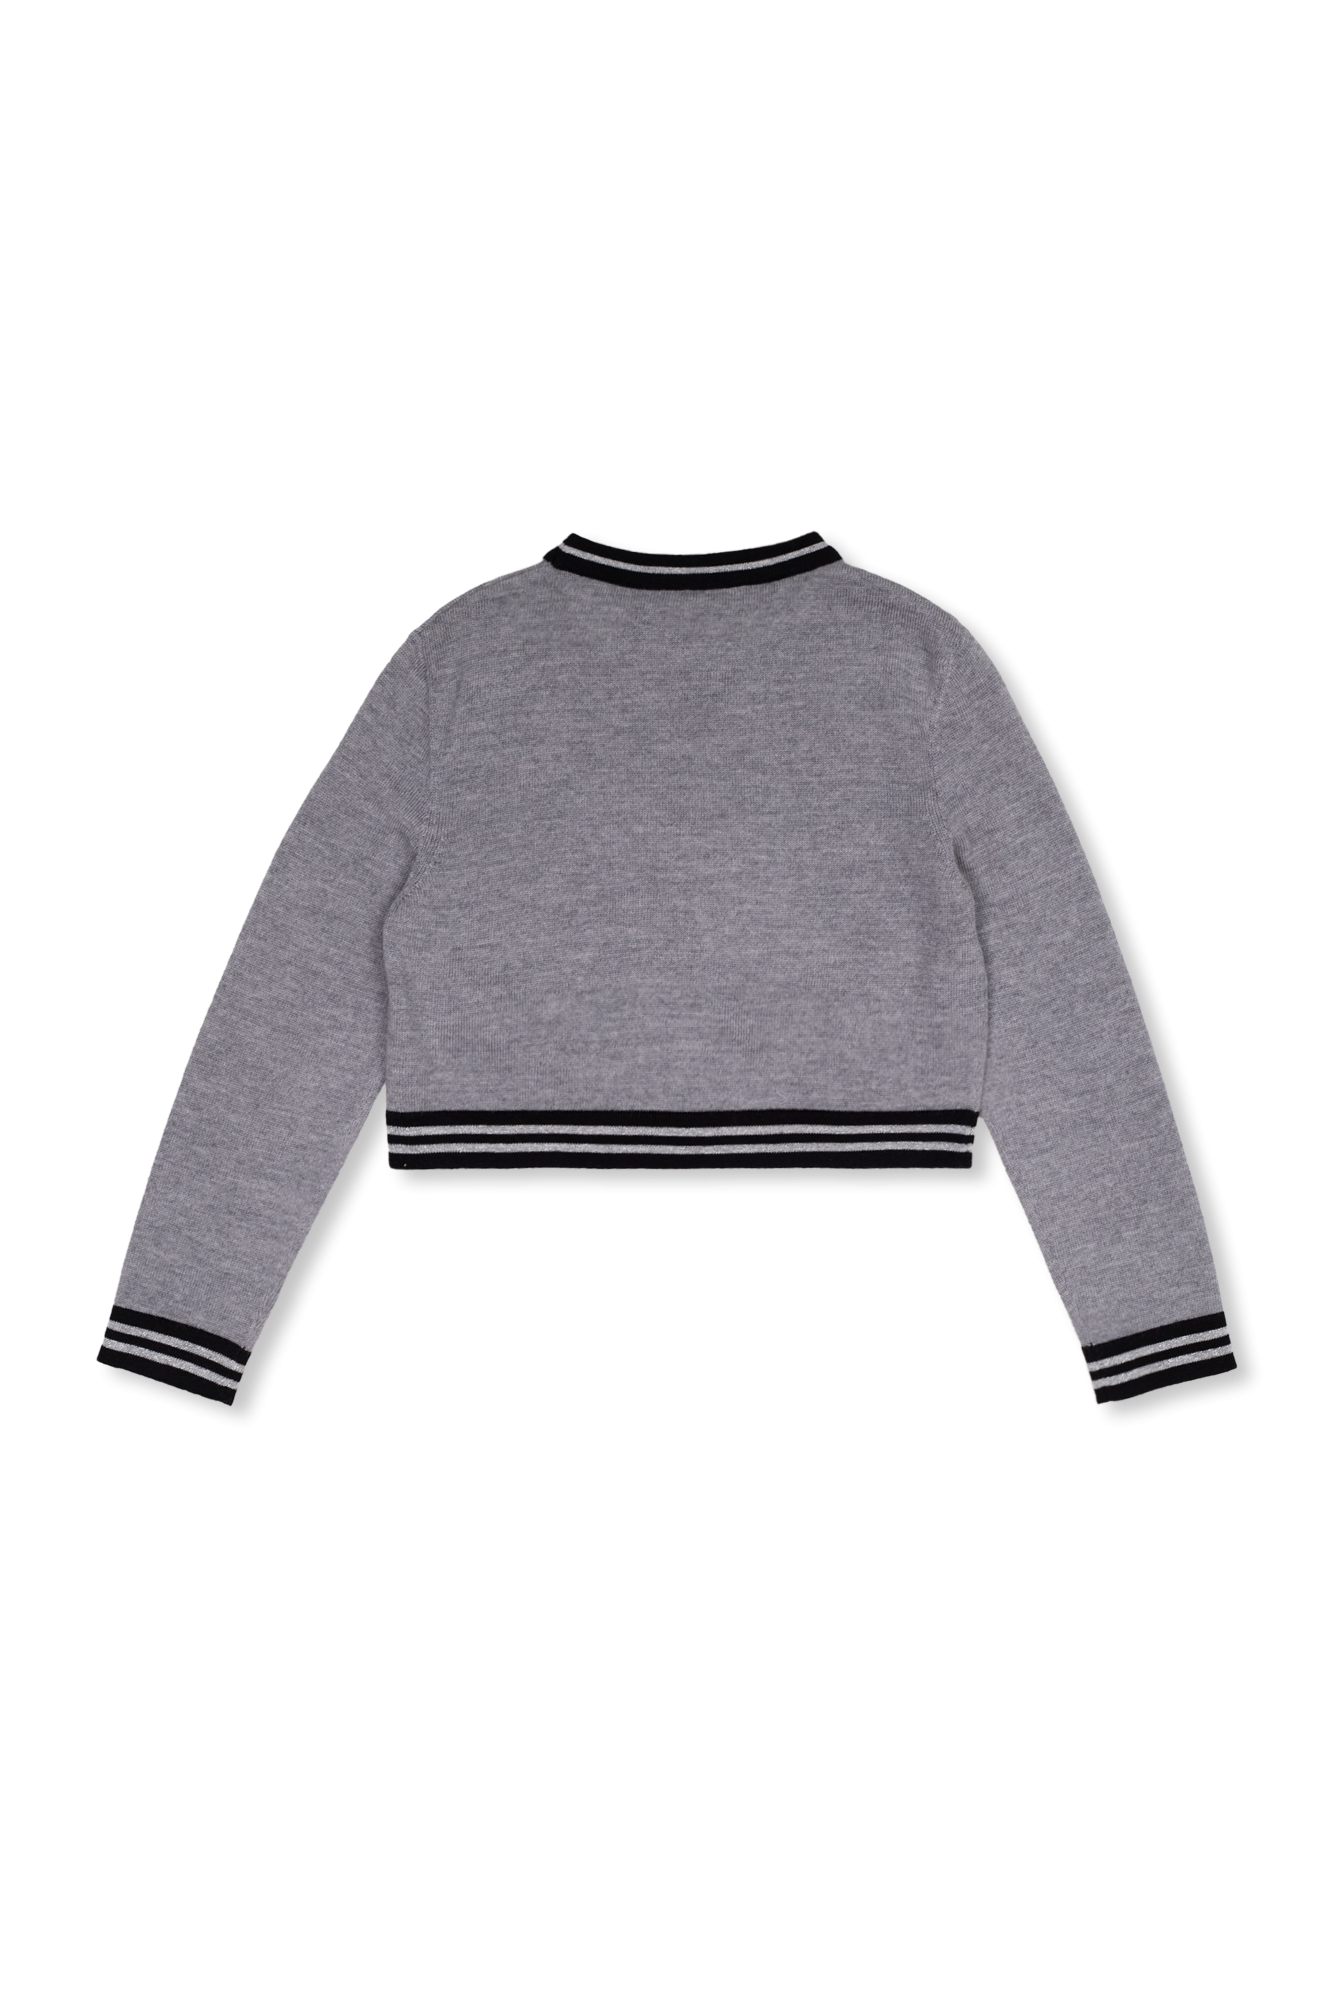 Balmain Kids Sweater with logo